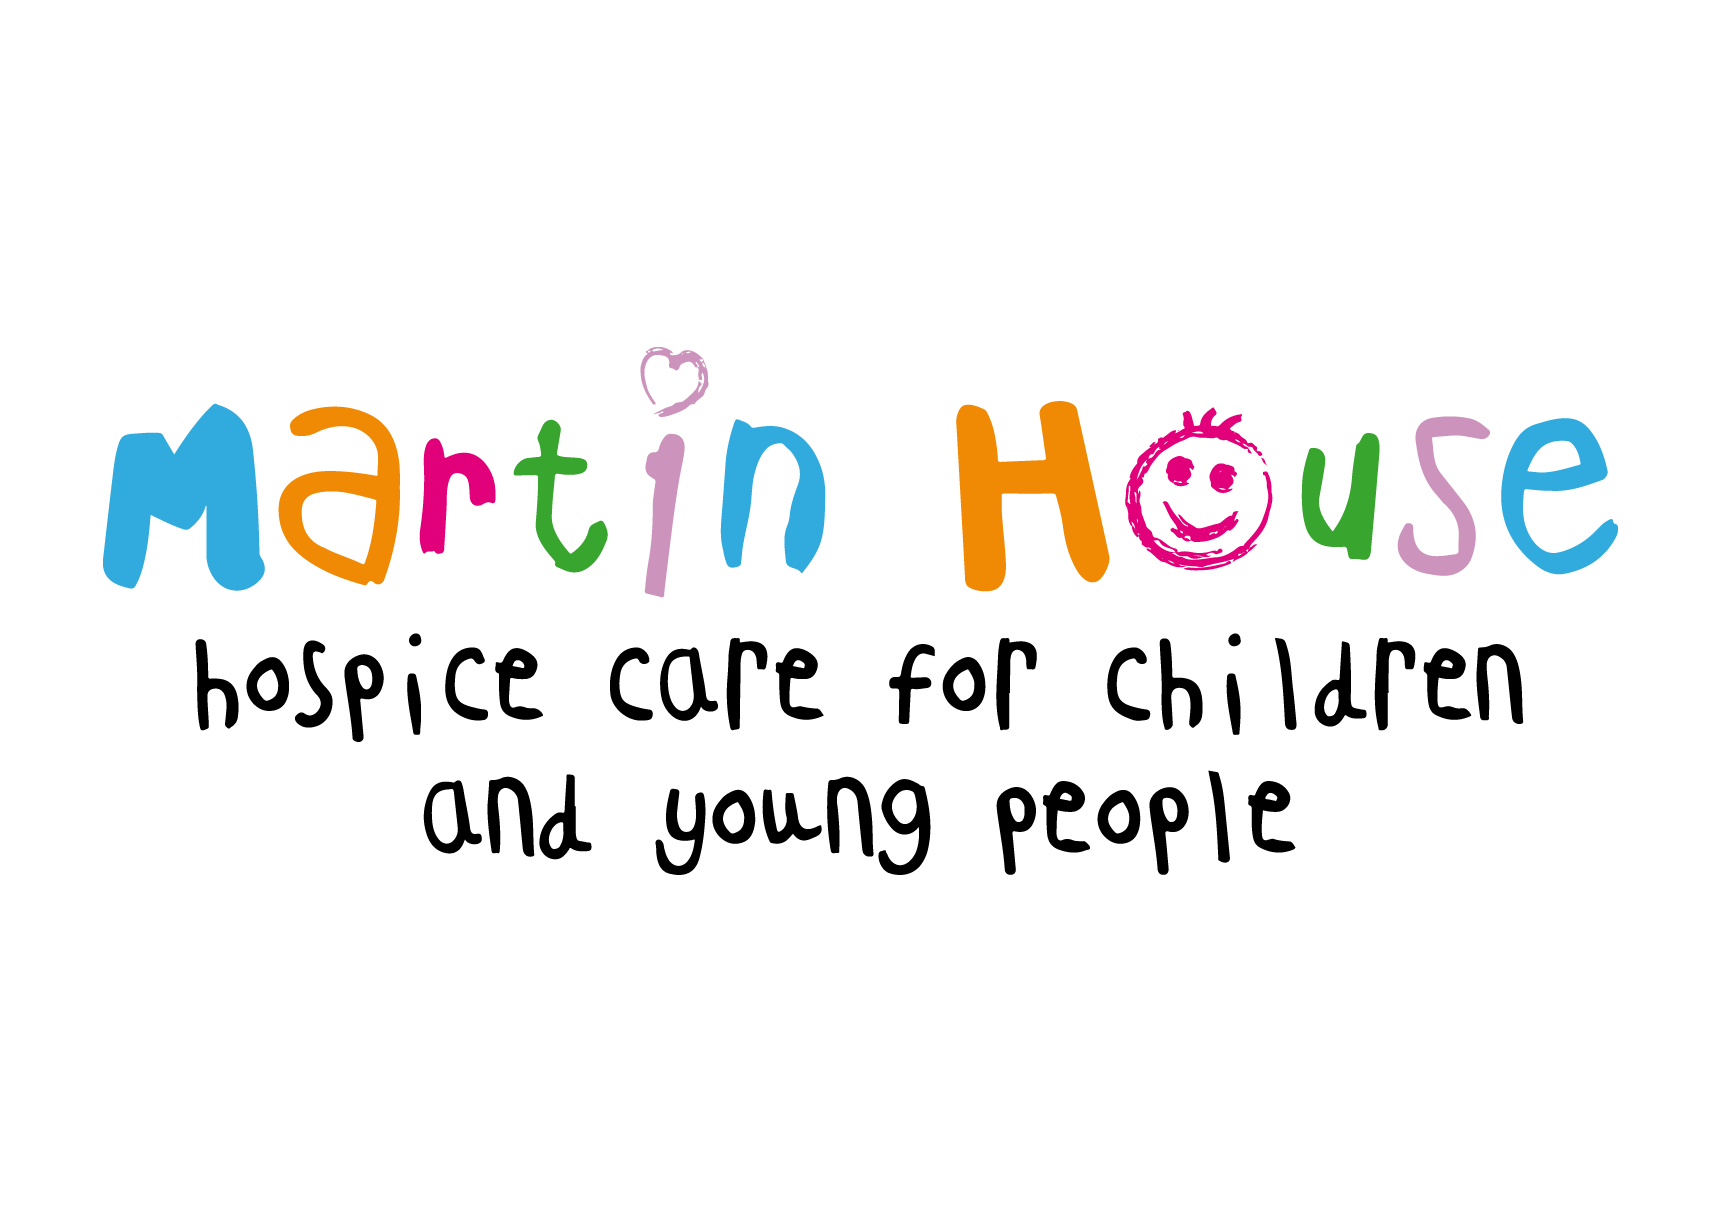 Martin House